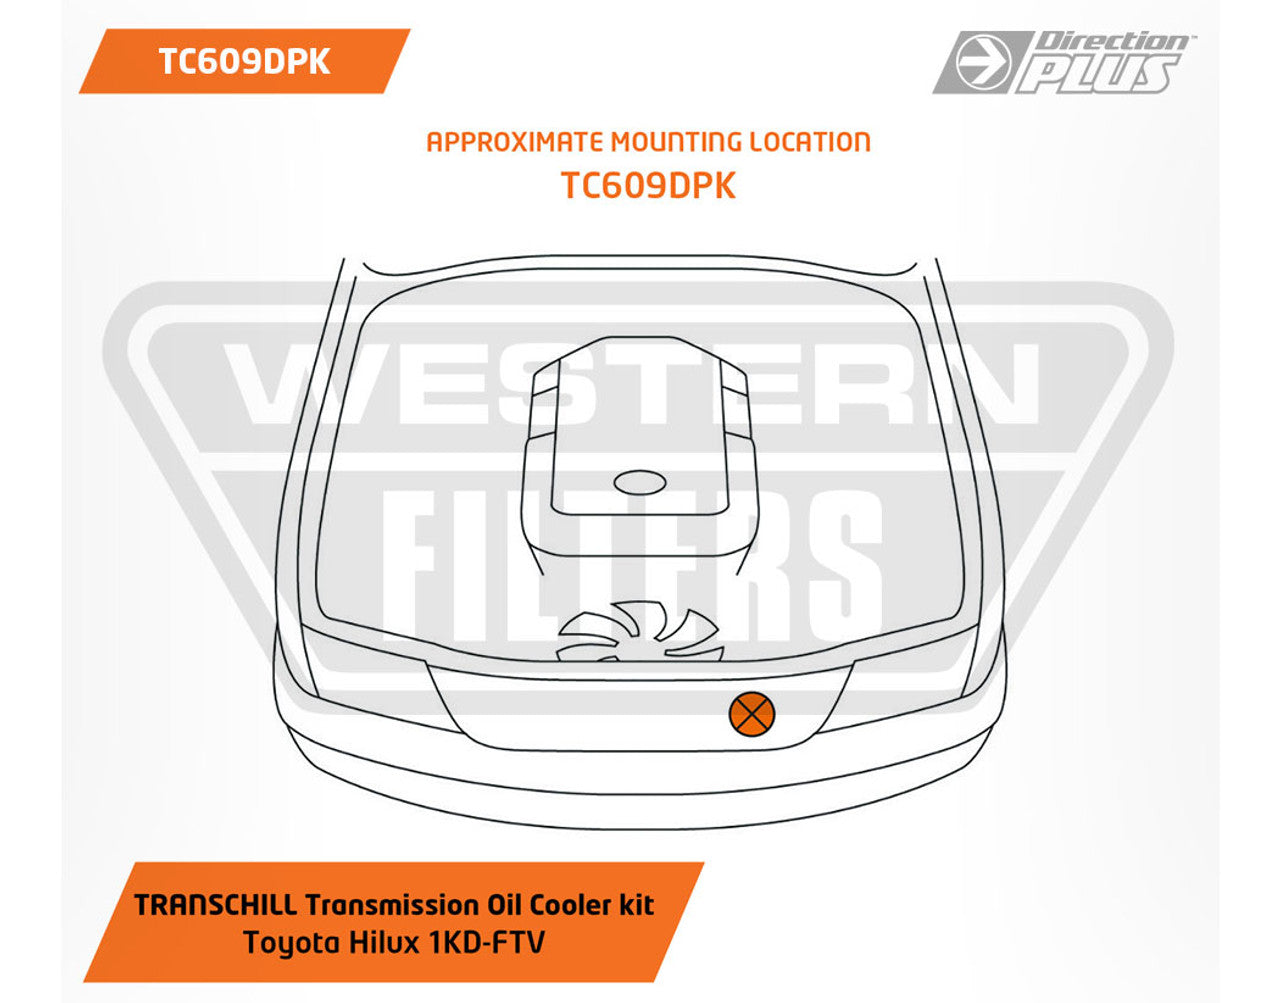 TC609DPK Transmission Cooler Kit for Toyota Hilux 2004-18 1KD-FTV / 2009-15 1GR TransChill